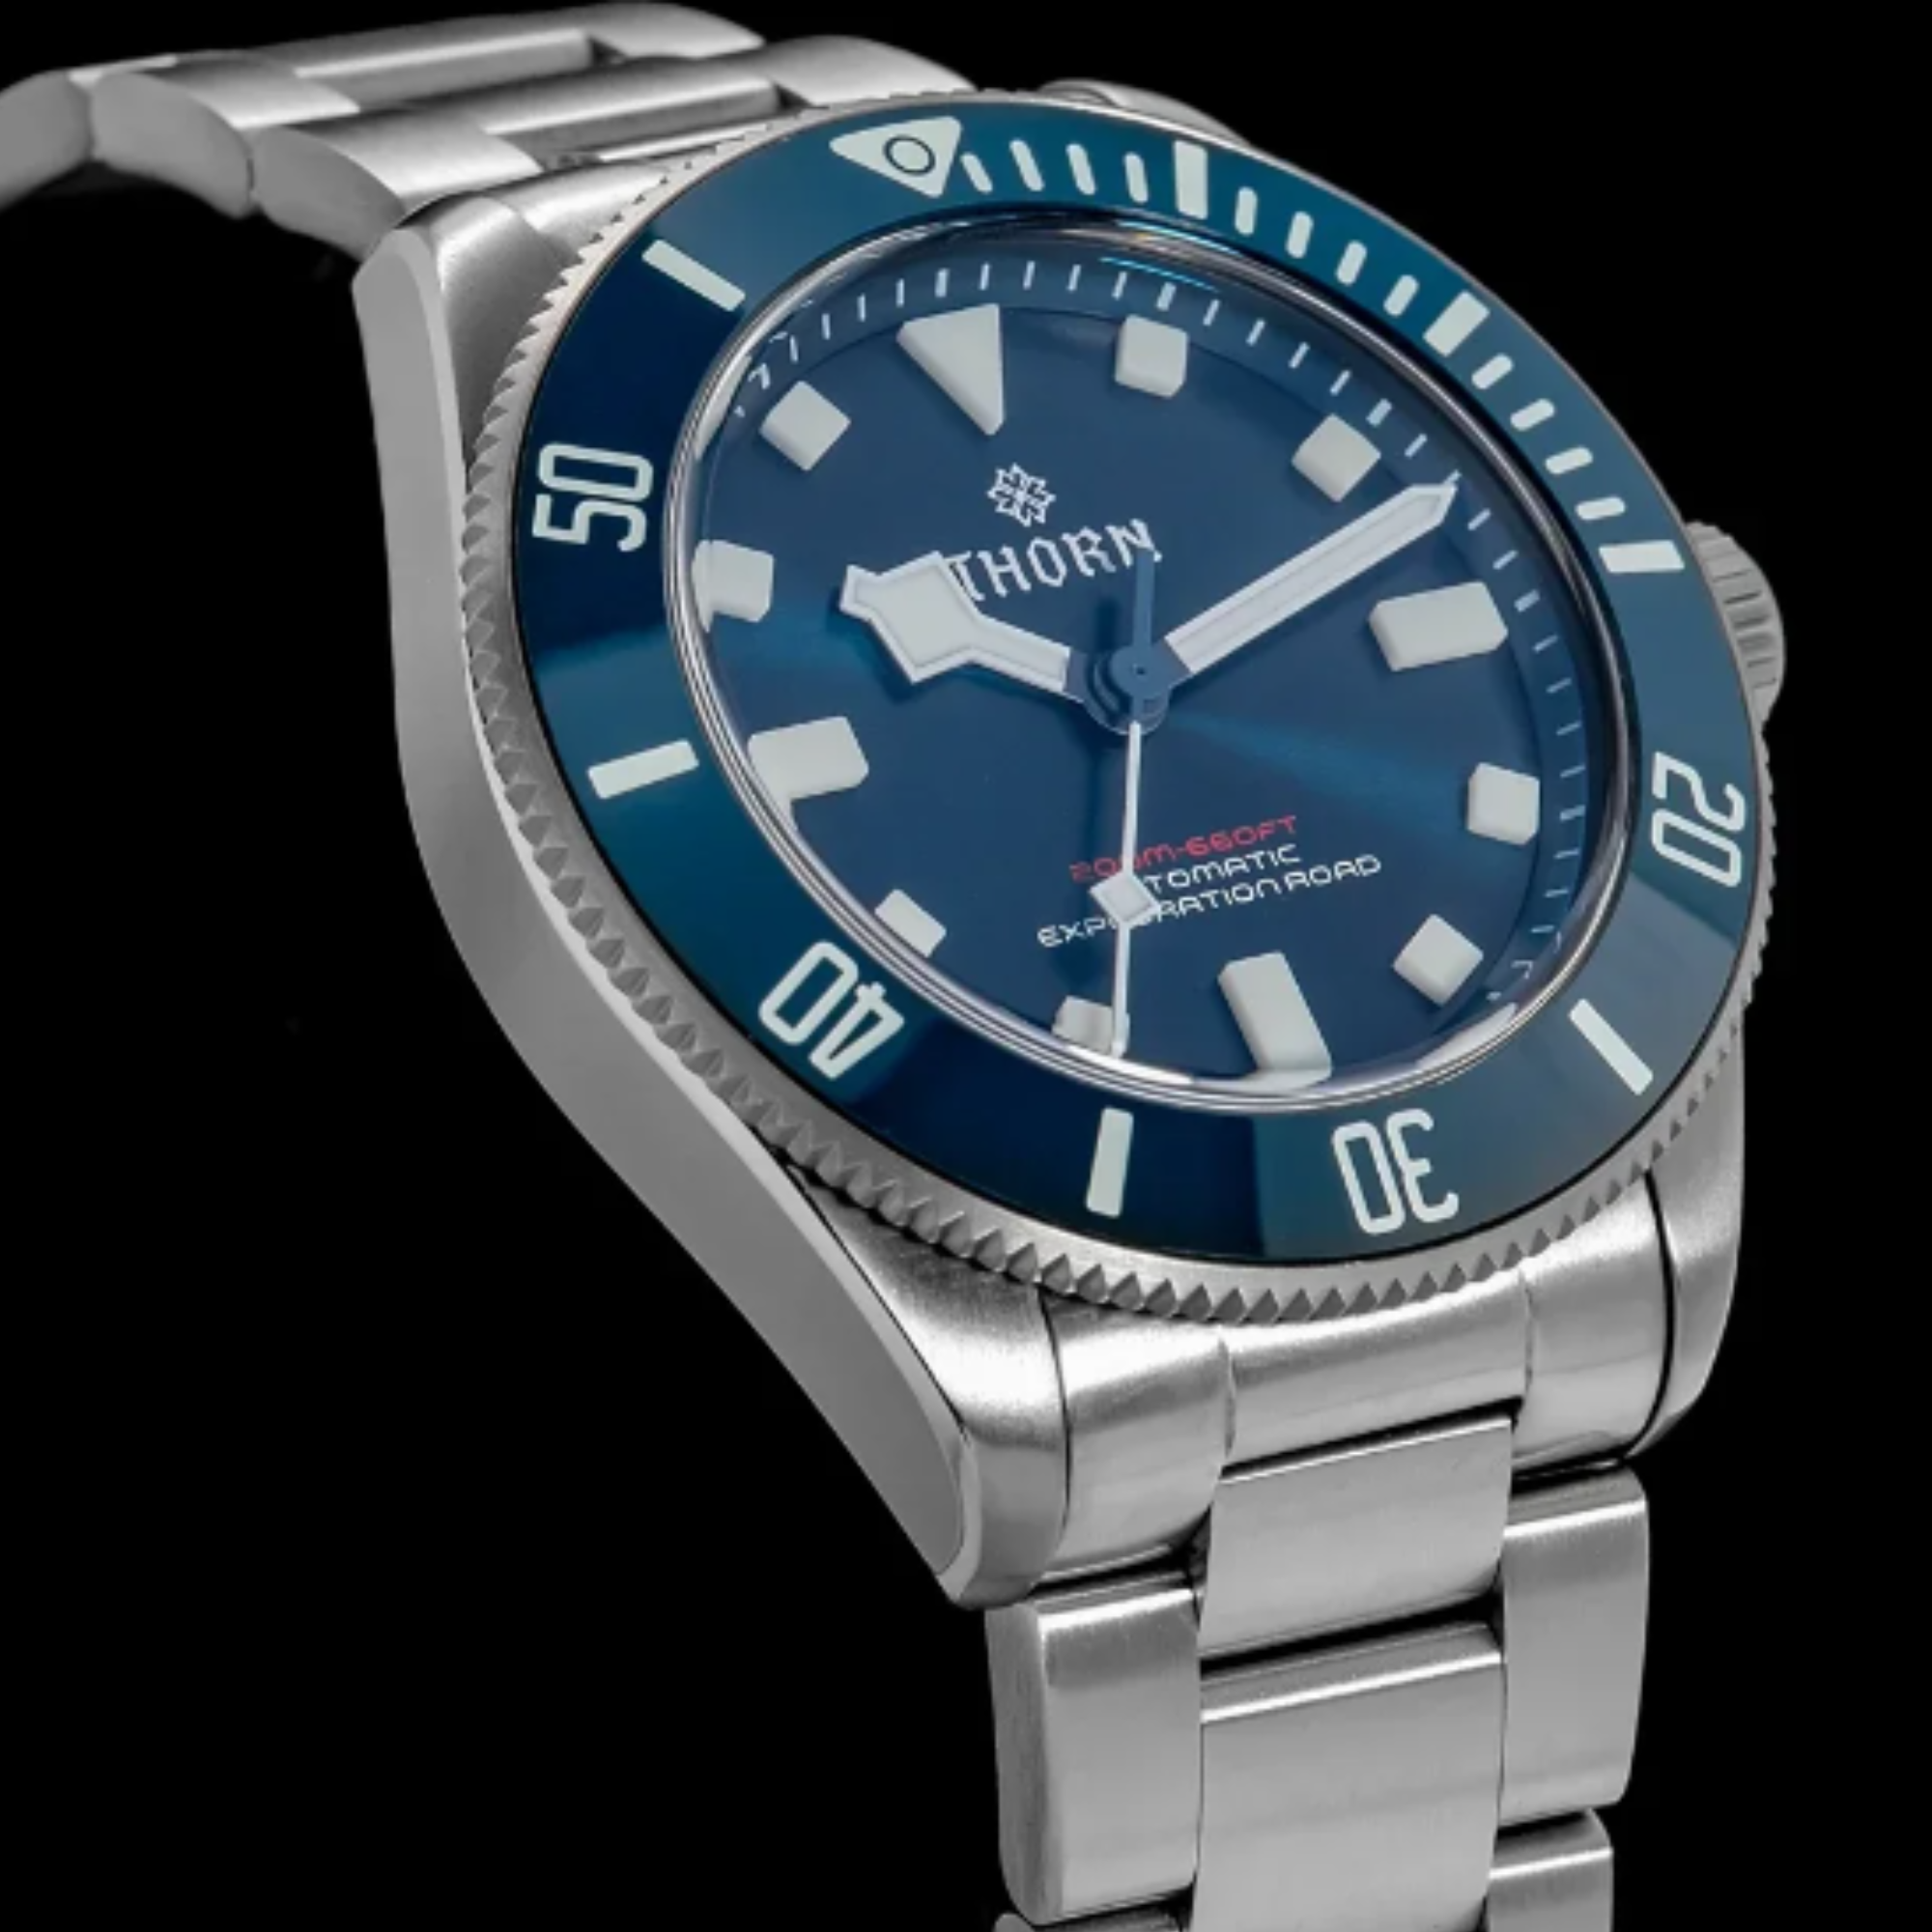 THORN 39mm Titanium Dive Watch Automatic with PT5000  Movement Sapphire Luminous Ceramic Bezel 20Bar Homage Diver Watch